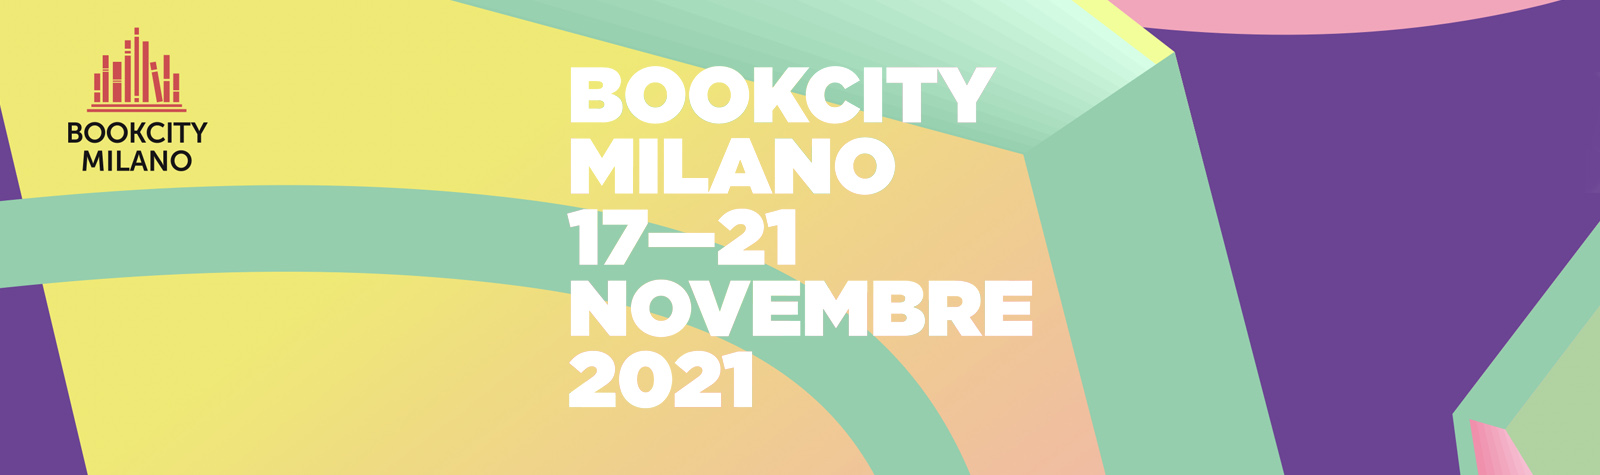 Bookcity Milano 2021